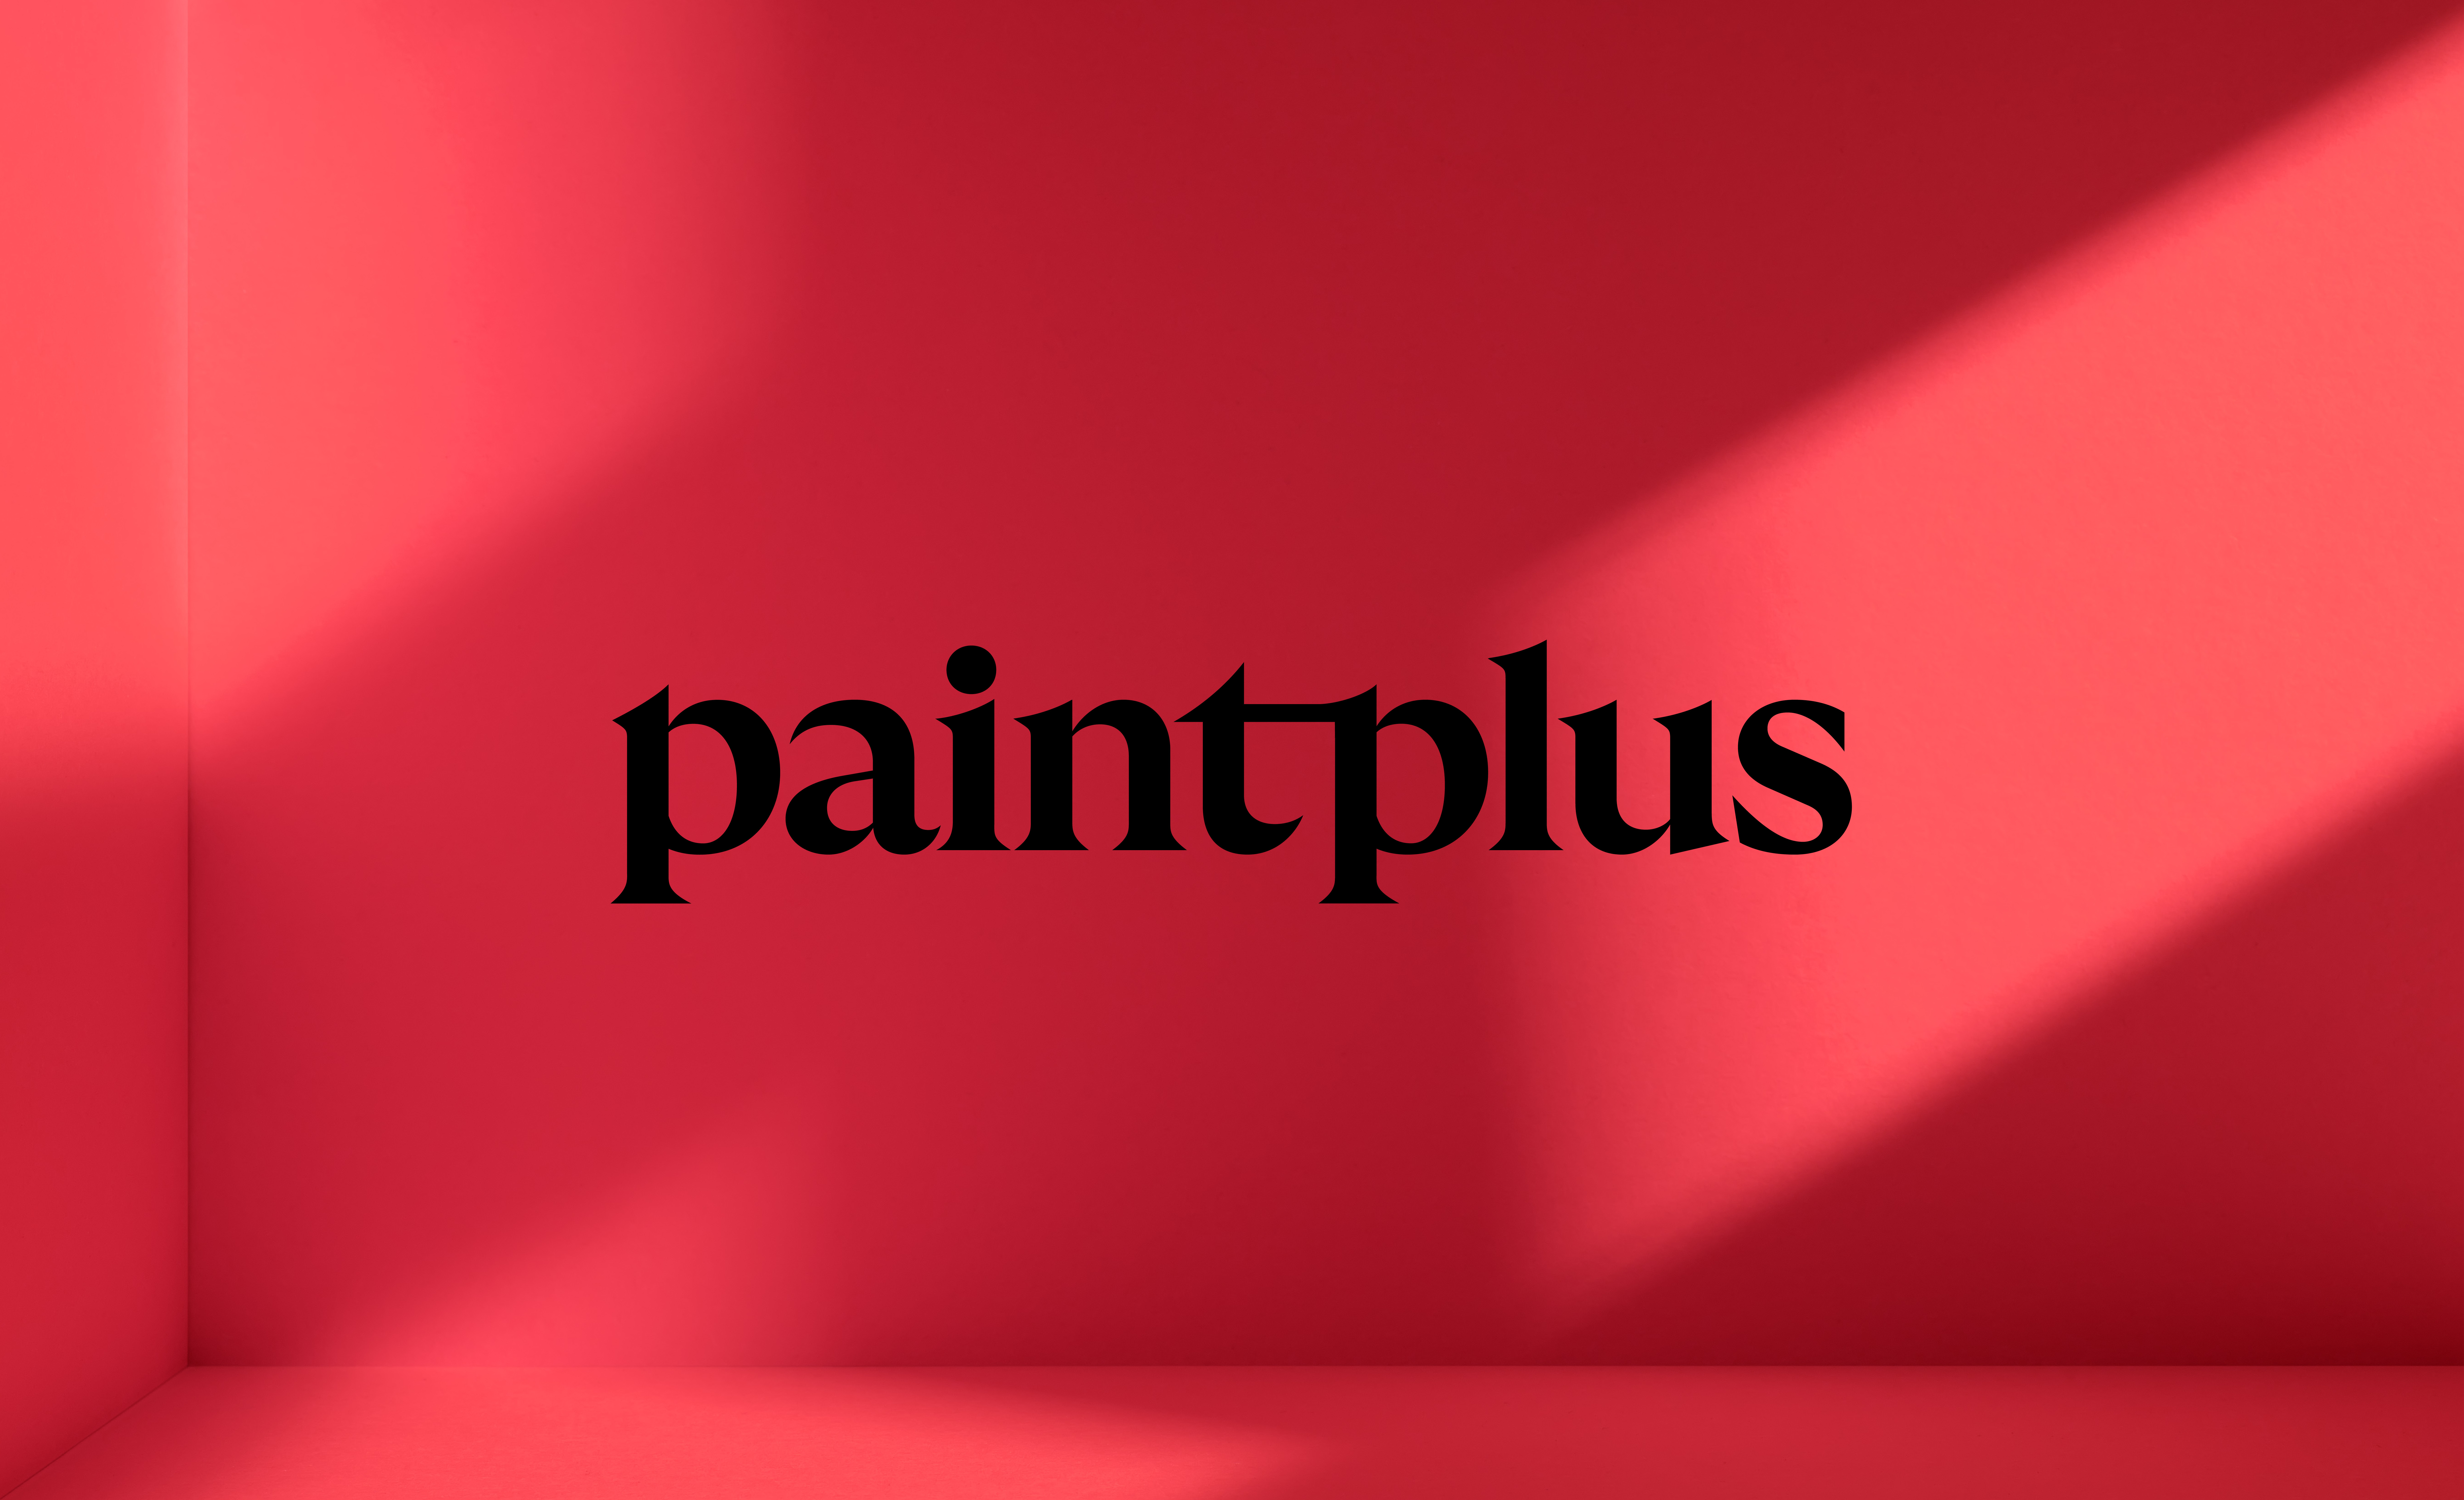 PaintPlus brand identity